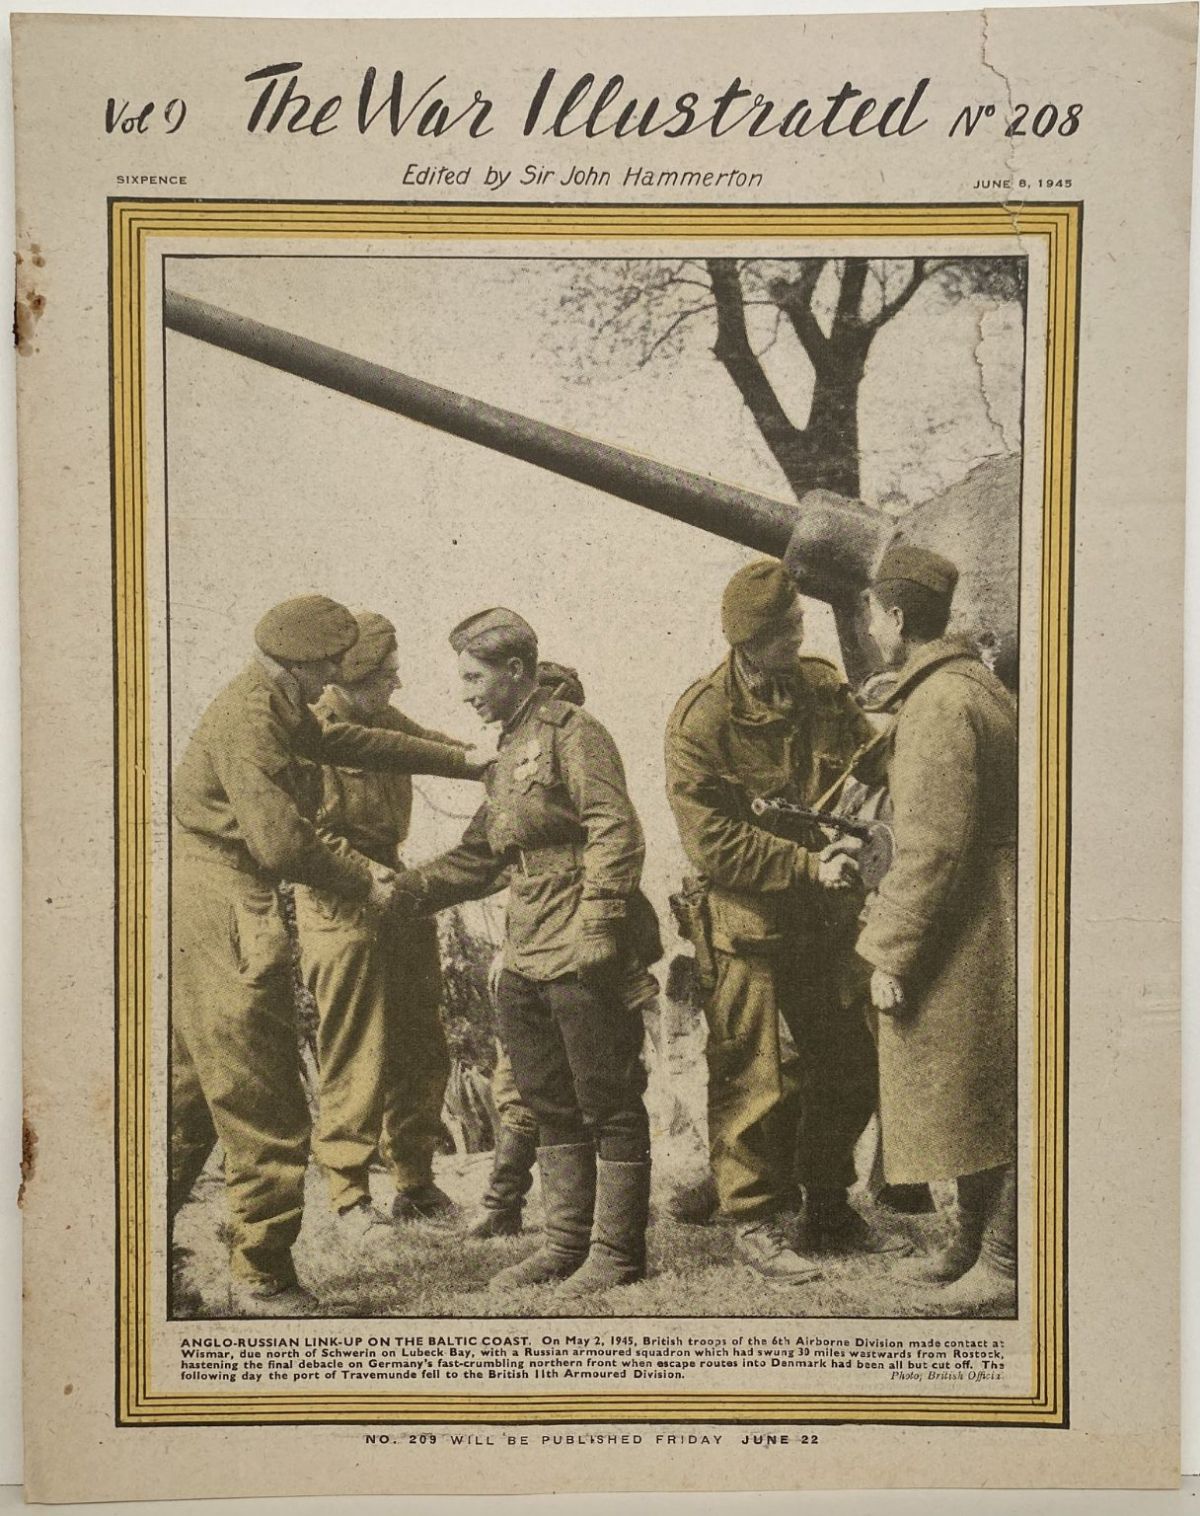 THE WAR ILLUSTRATED - Vol 9, No 208, 8th June 1945